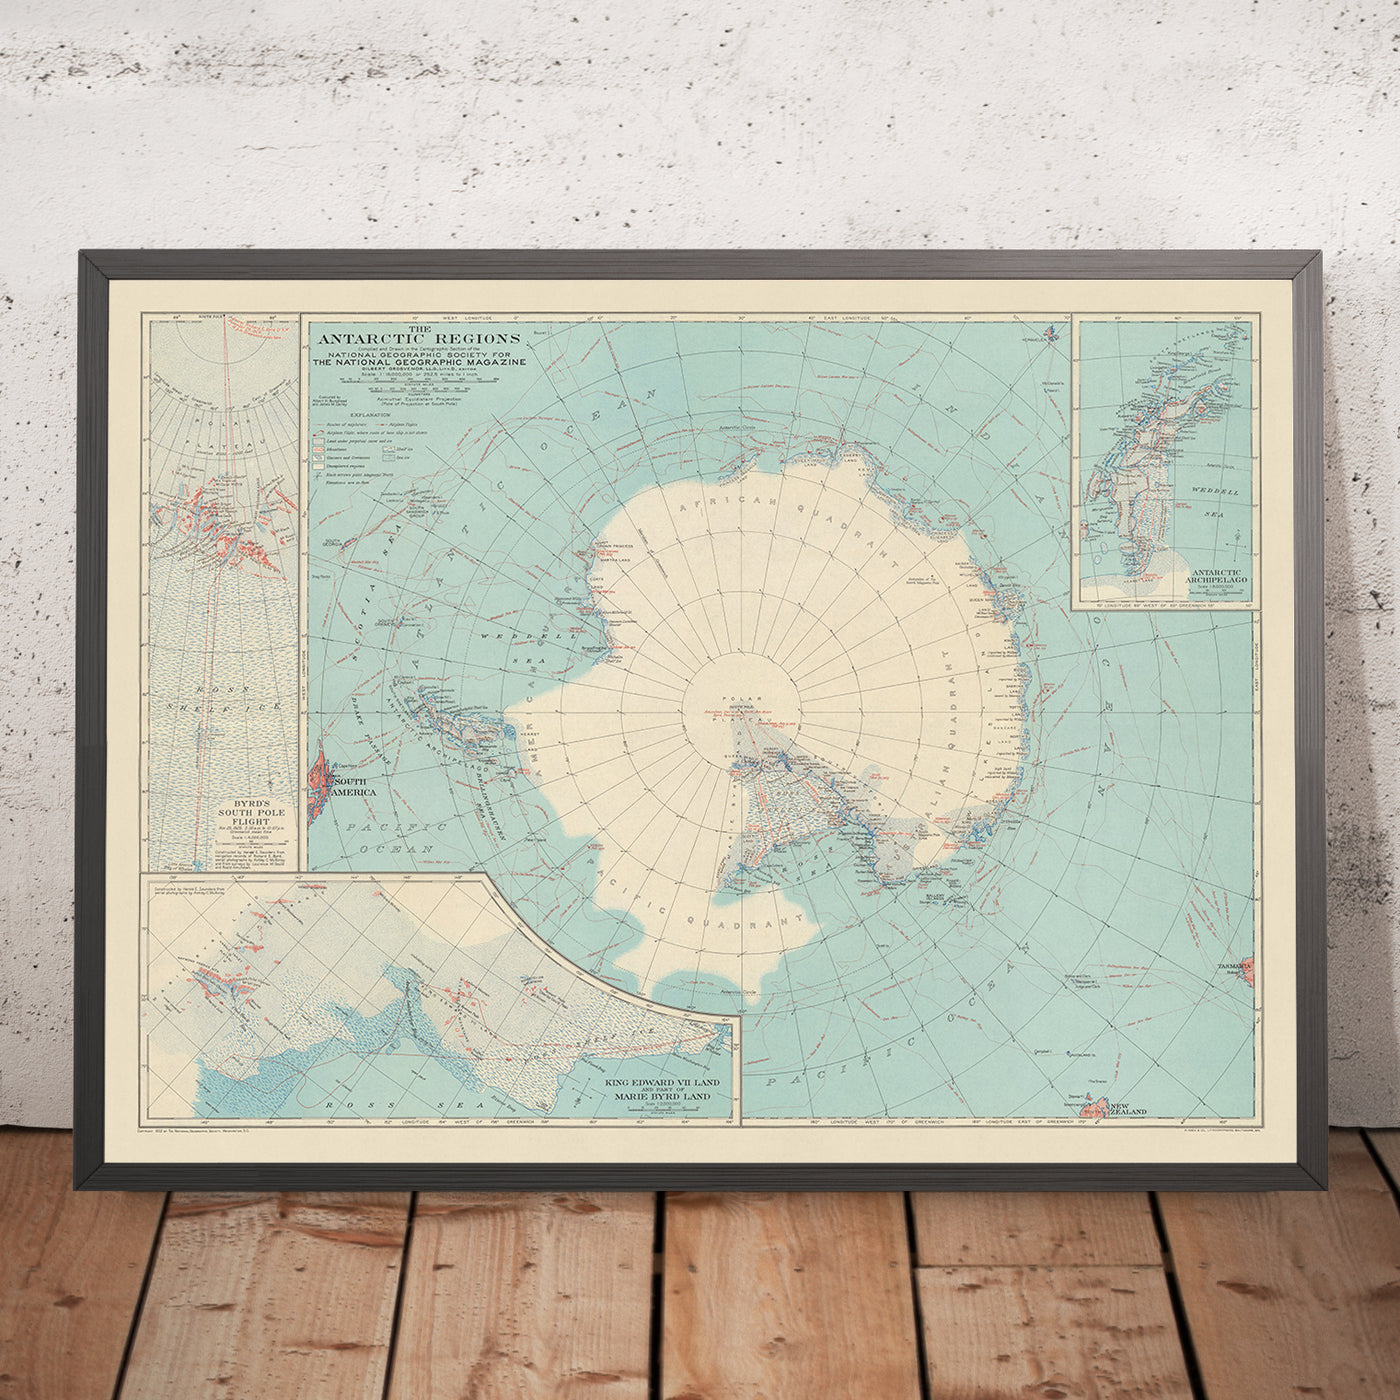 Old Map of Antarctica Exploration, 1932 by National Geographic Society: Shackleton, Amundsen, Byrd, Scott & Mawson